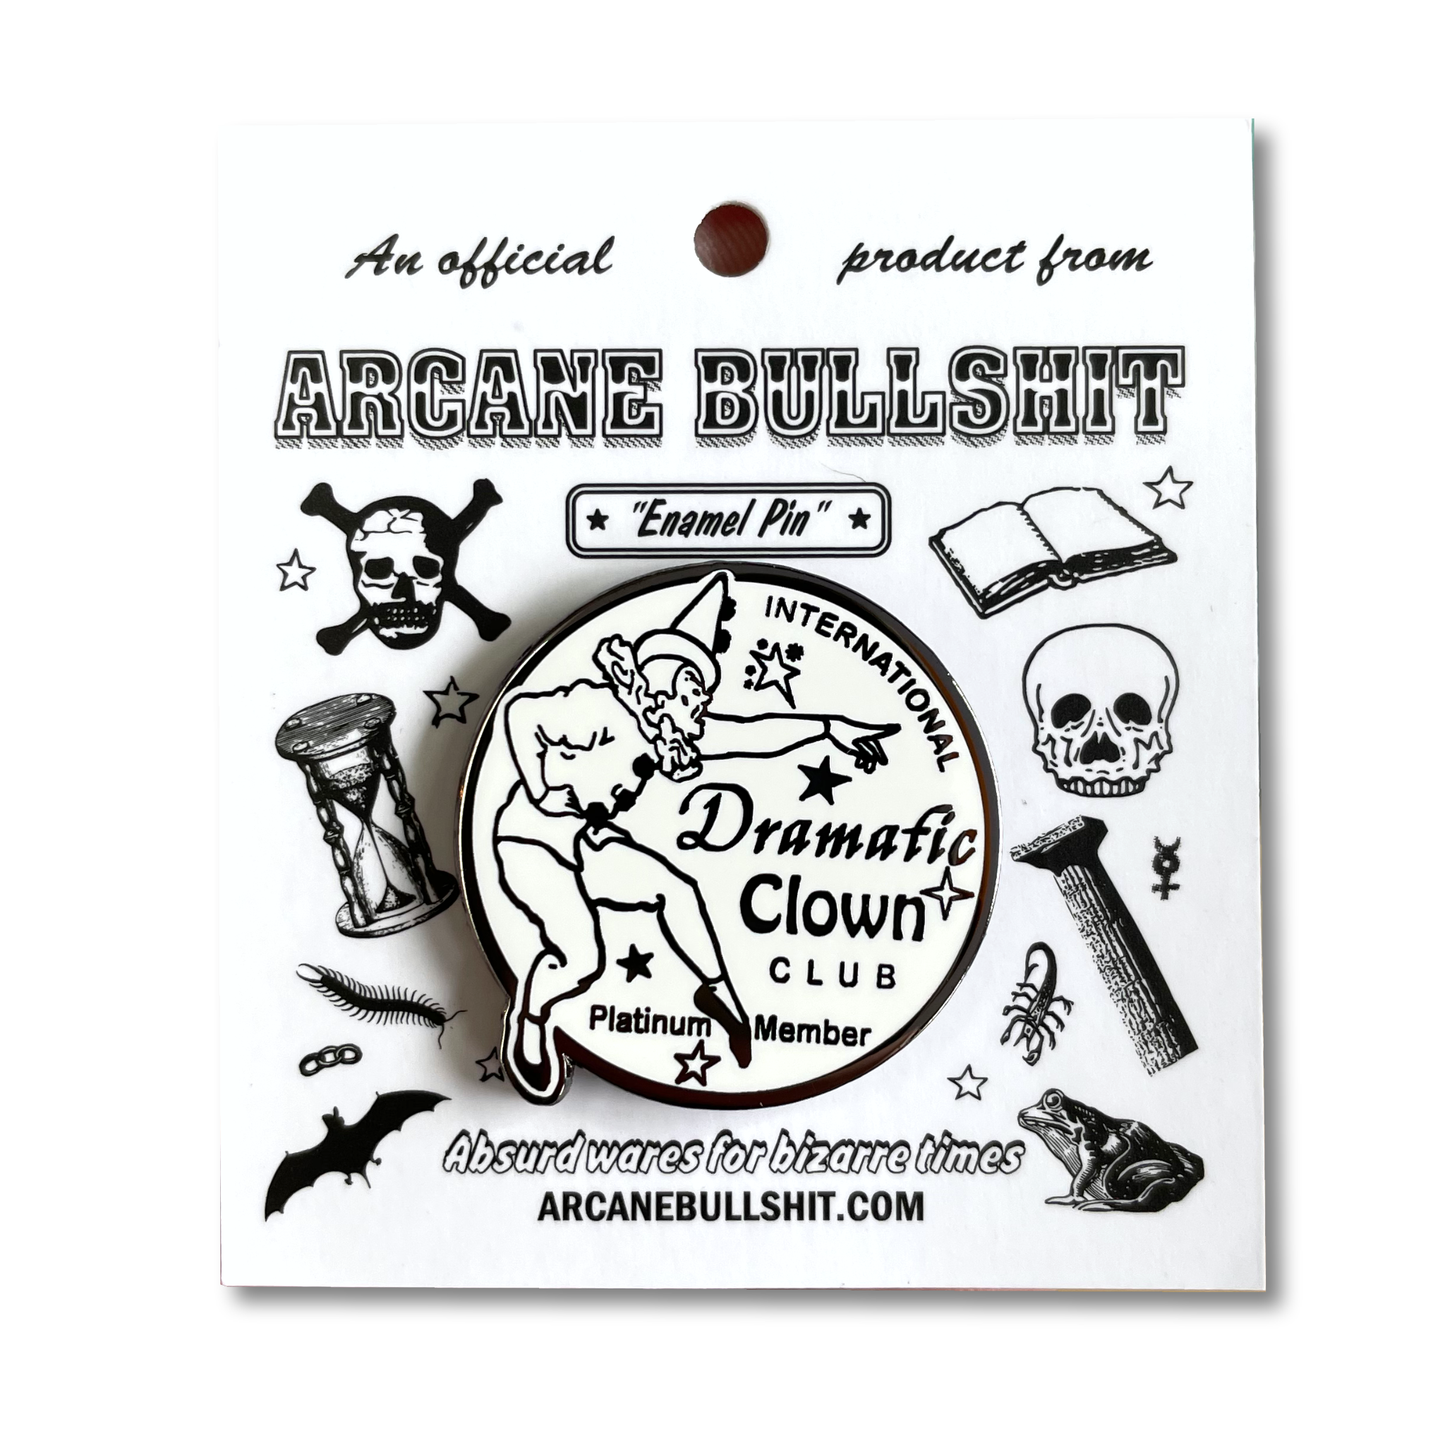 "Dramatic Clown Club" Pin